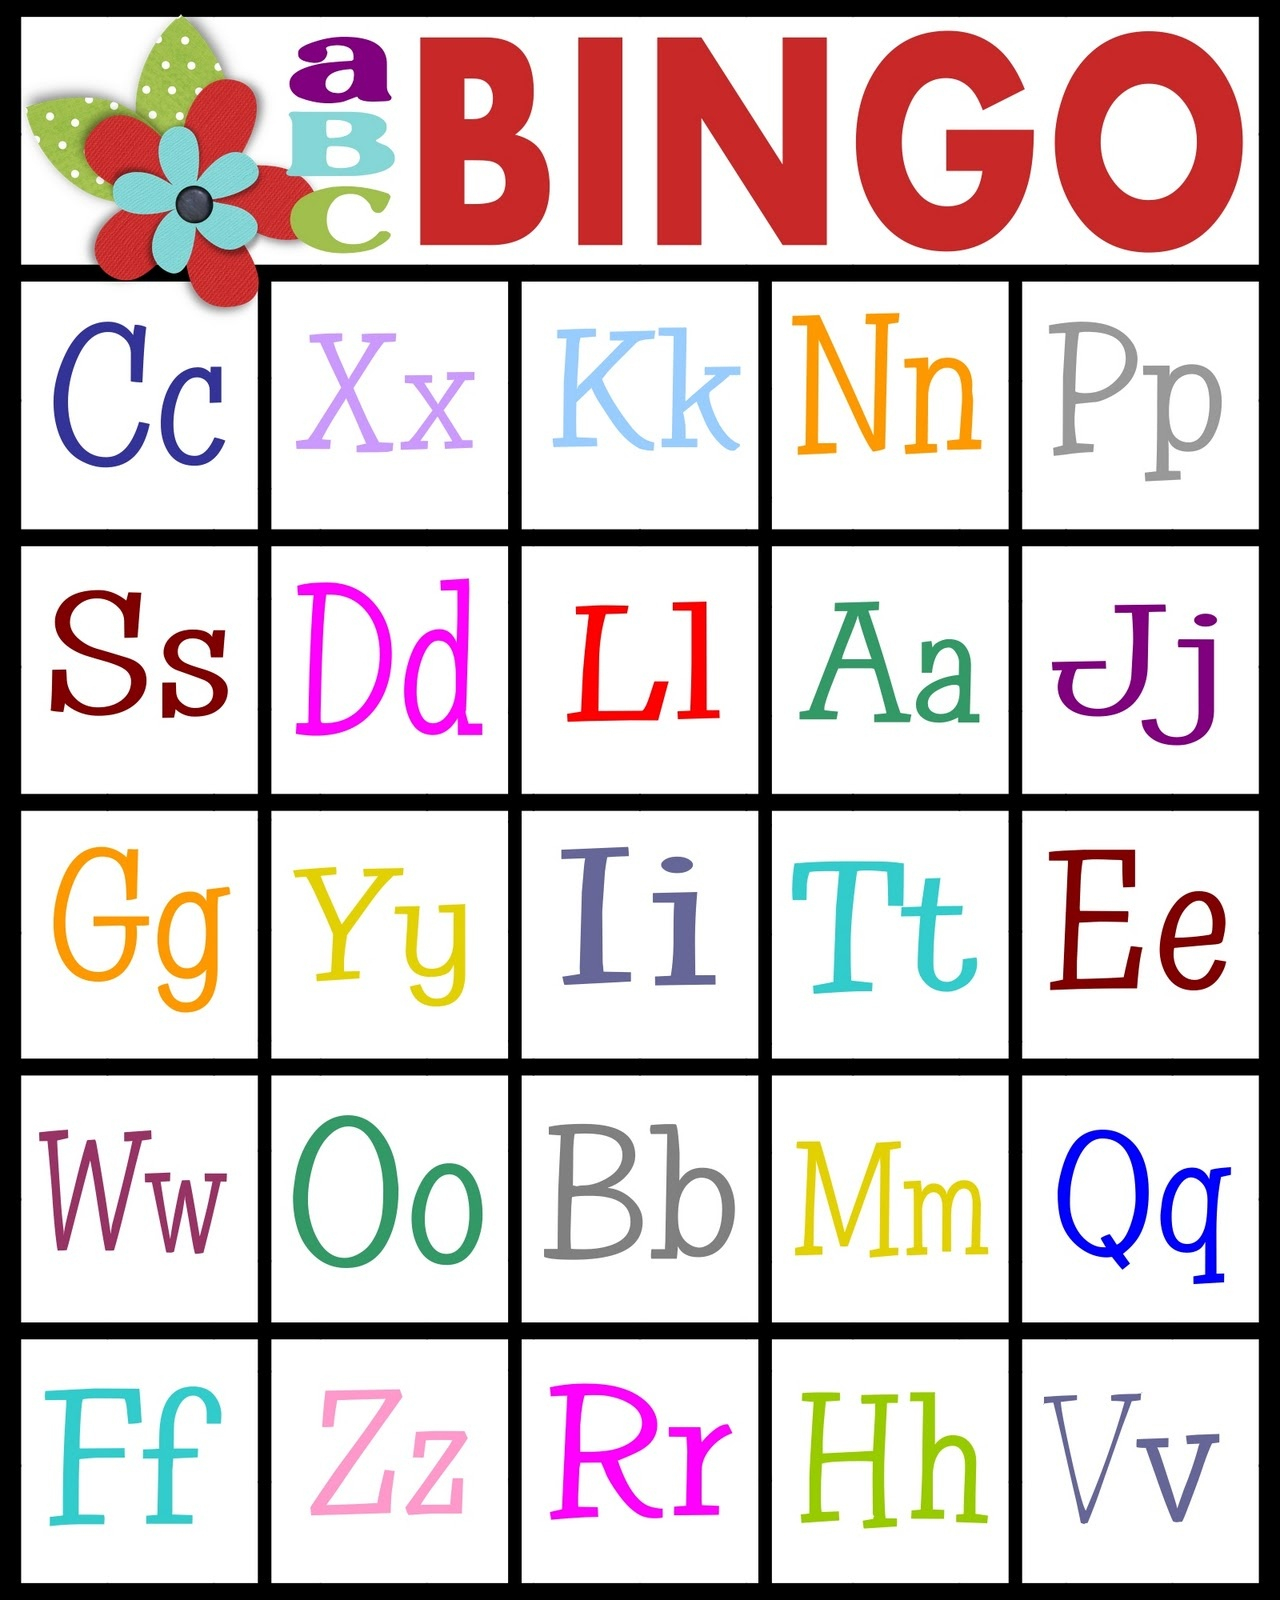 Free Printable Alphabet Bingo Cards Free Printable